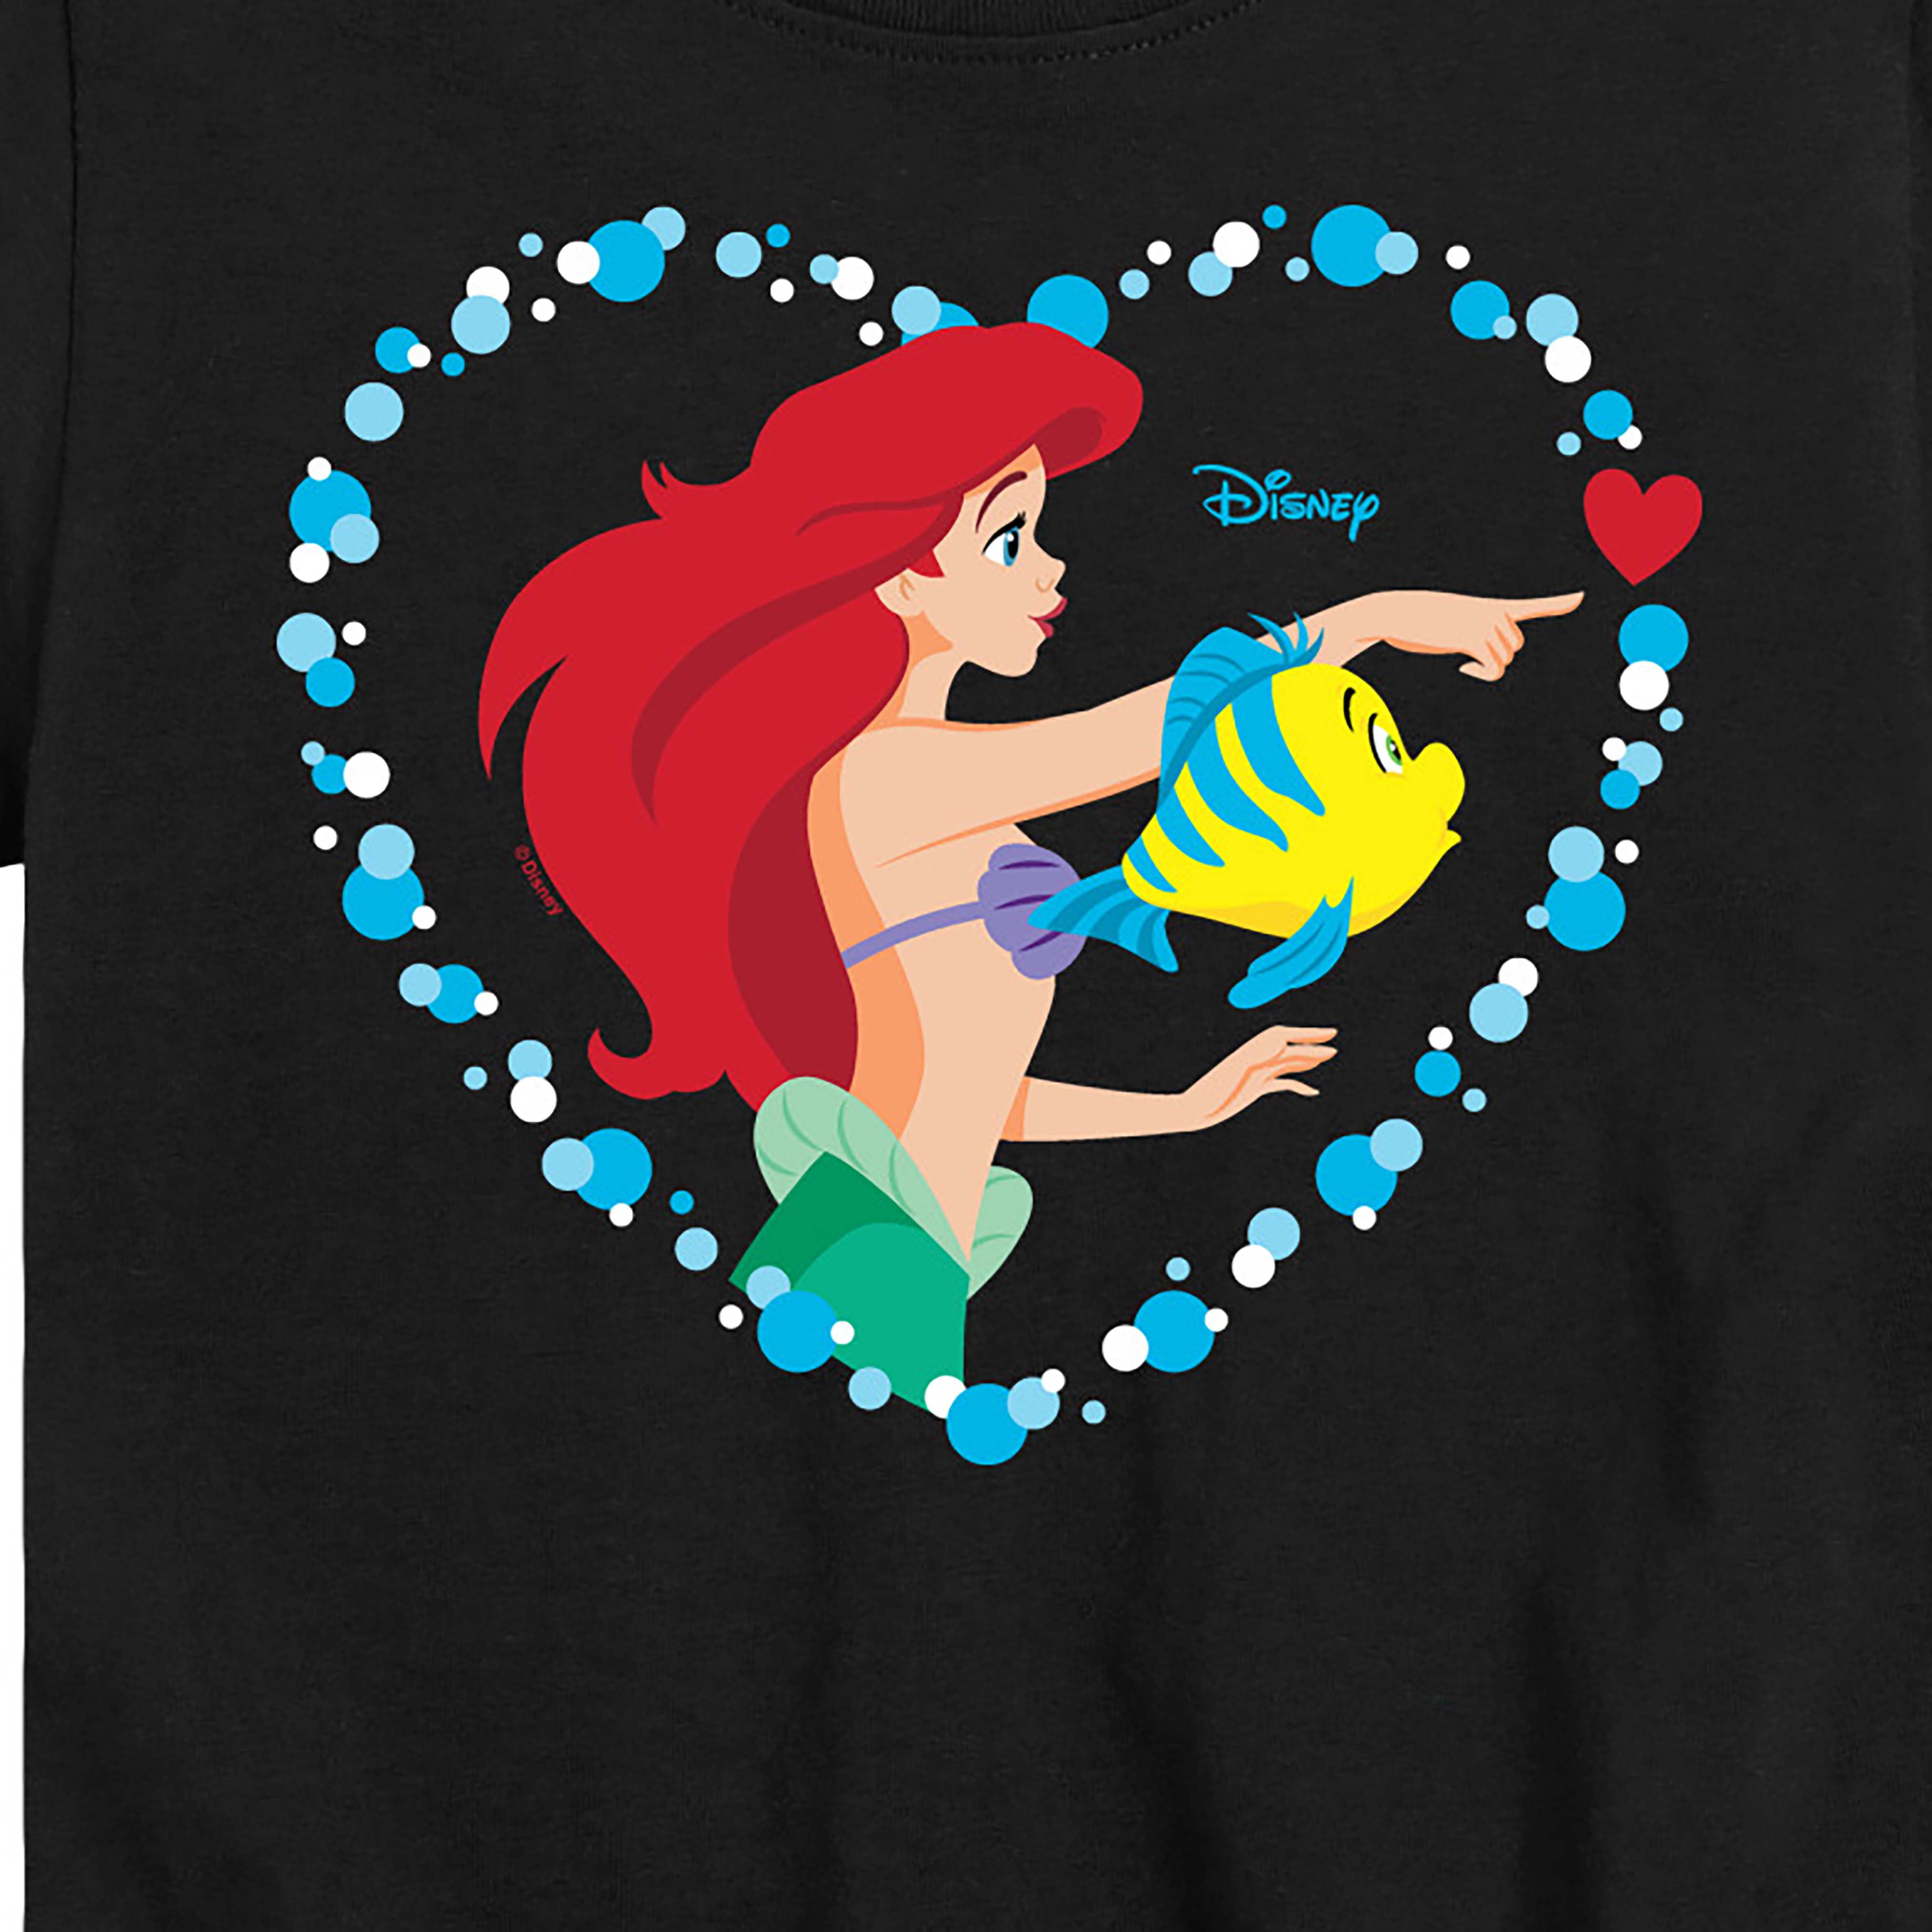 Youth - - Short Princess Disney Sleeve - Day Valentine\'s T-Shirt - Graphic Ariel Heart